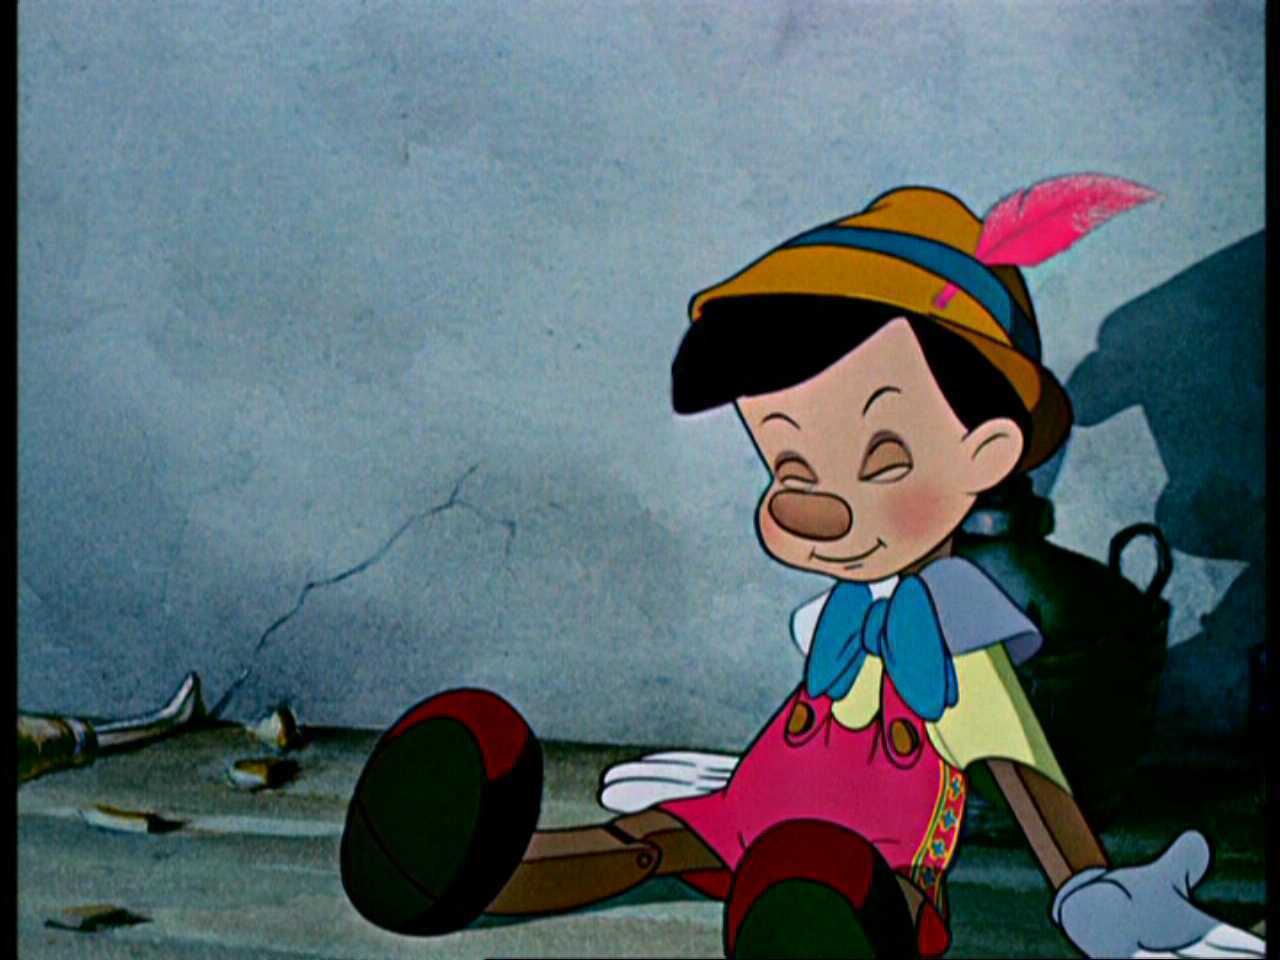 Pinocchio - Classic Disney Image (5433719) - Fanpop